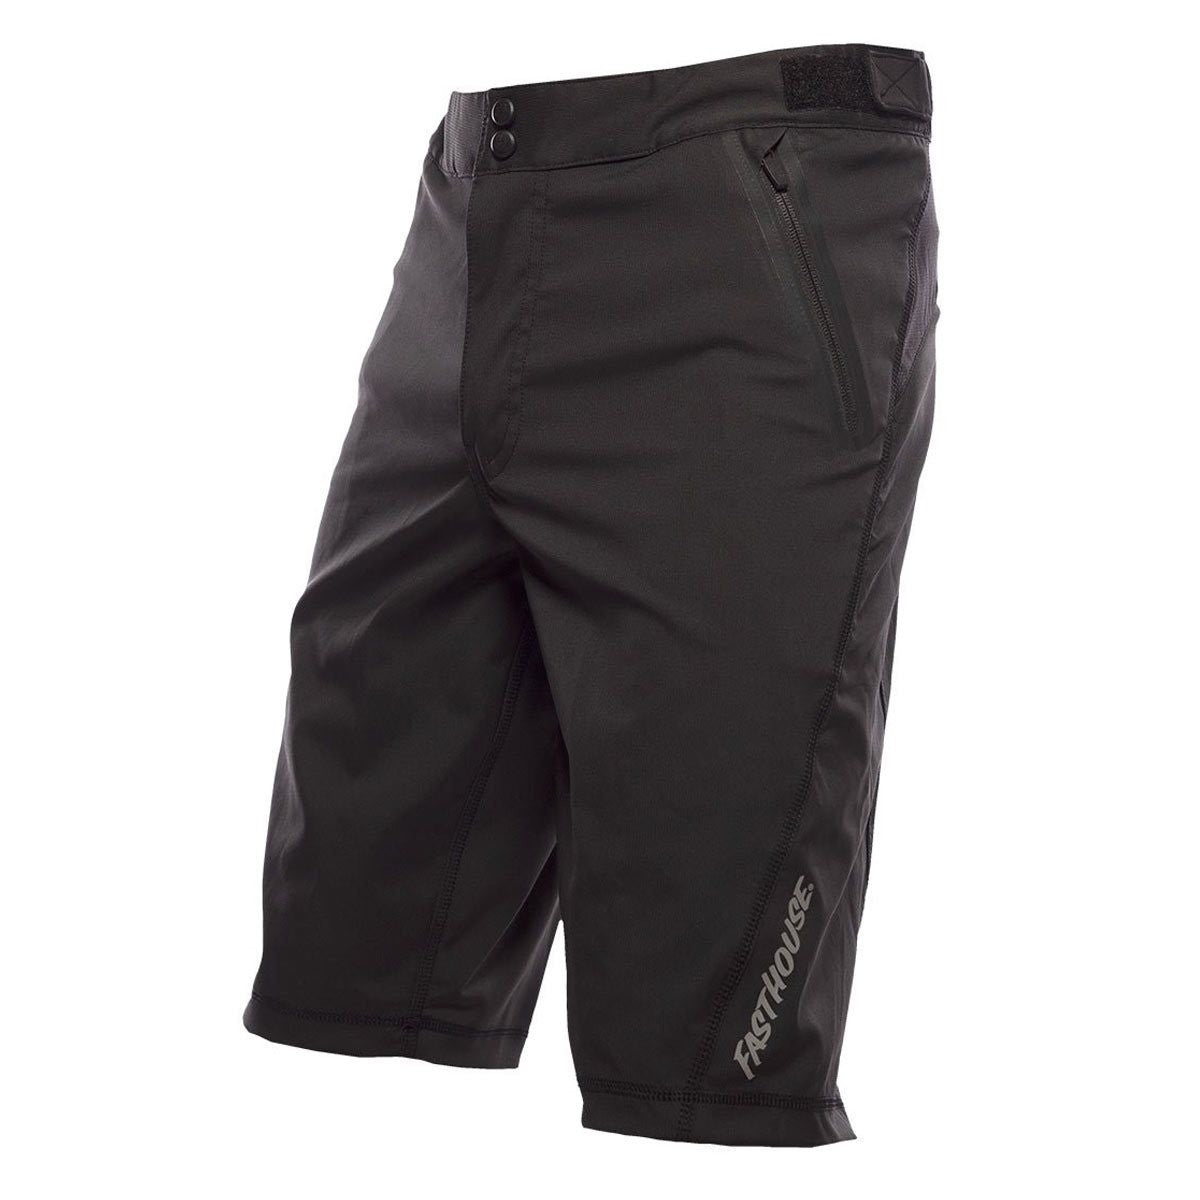 Fasthouse Crossline 2.0 Short Black Bike Shorts